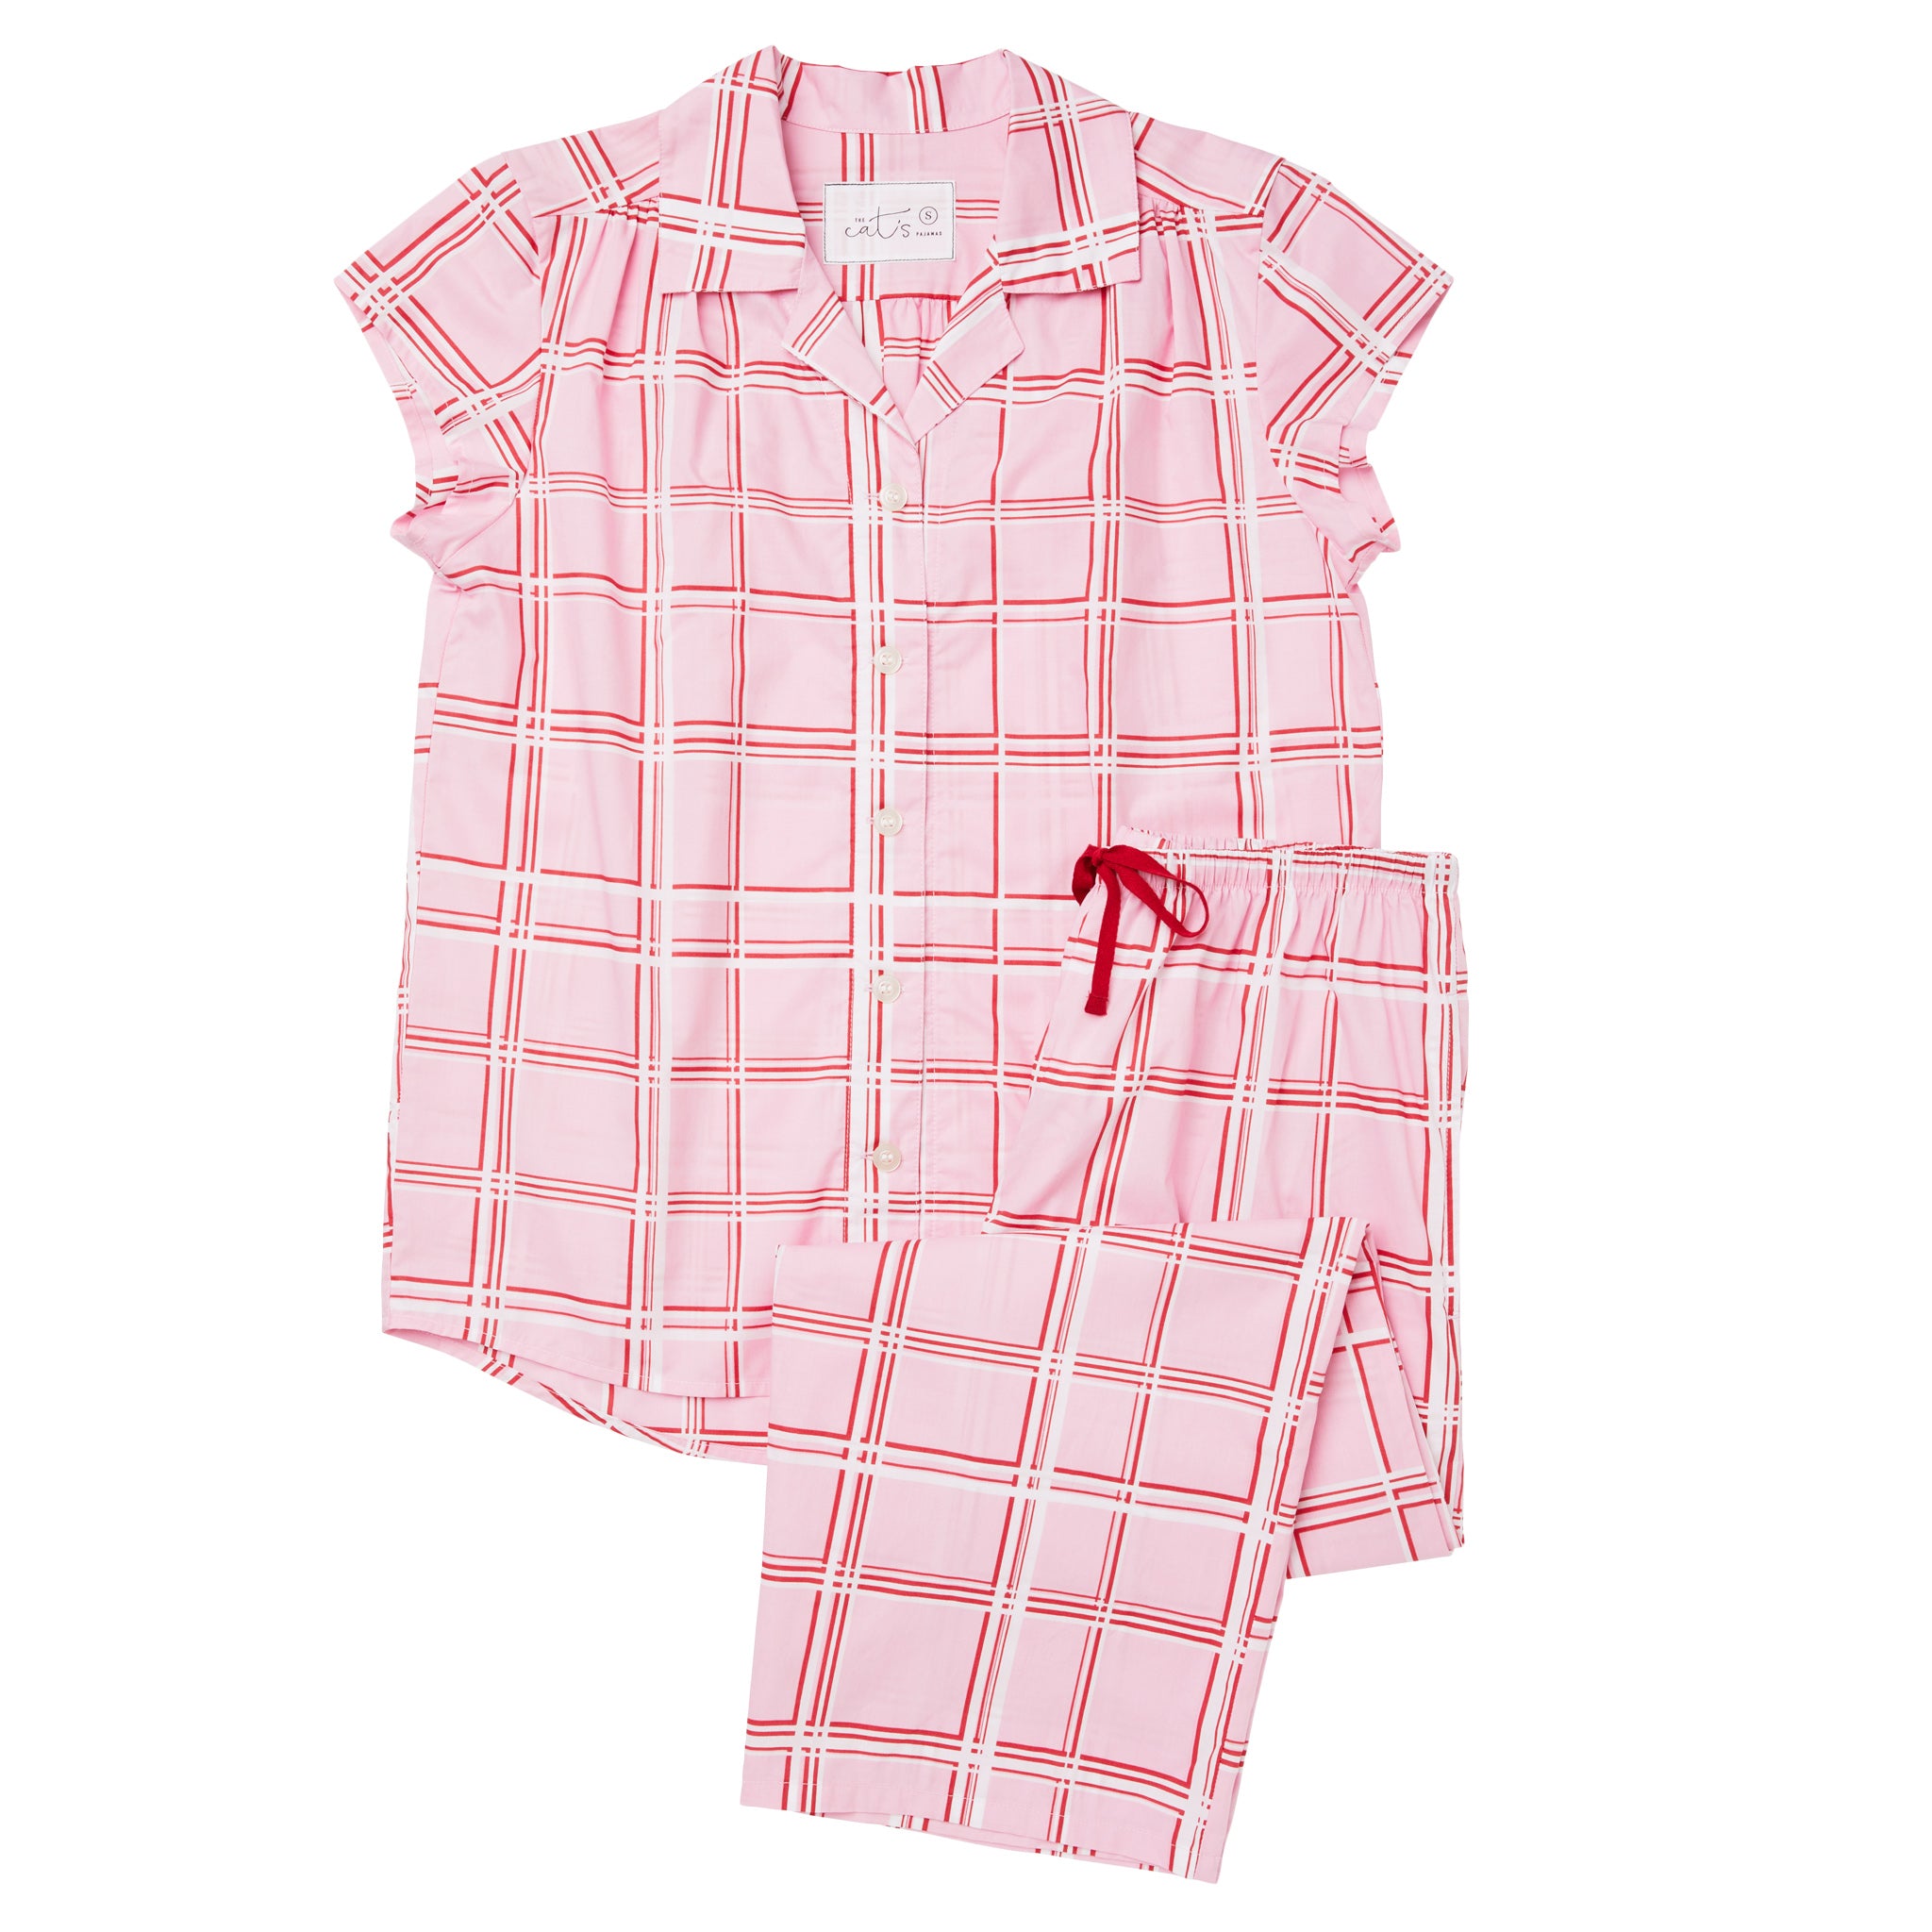 Capri Pajama Set - Pink Check